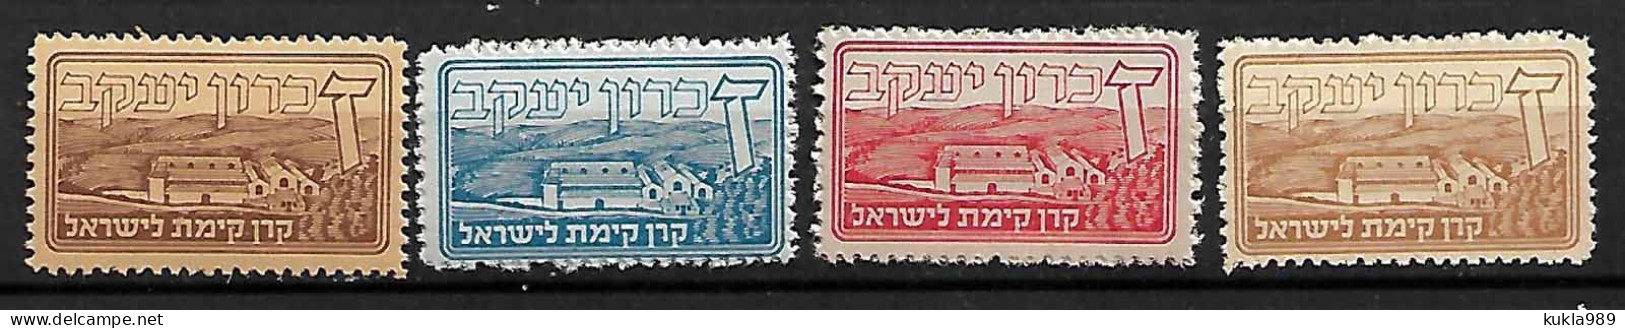 JUDAICA KKL JNF STAMPS 1948 HEBREW ALPHABET "ZAYIN" MNH - Colecciones & Series